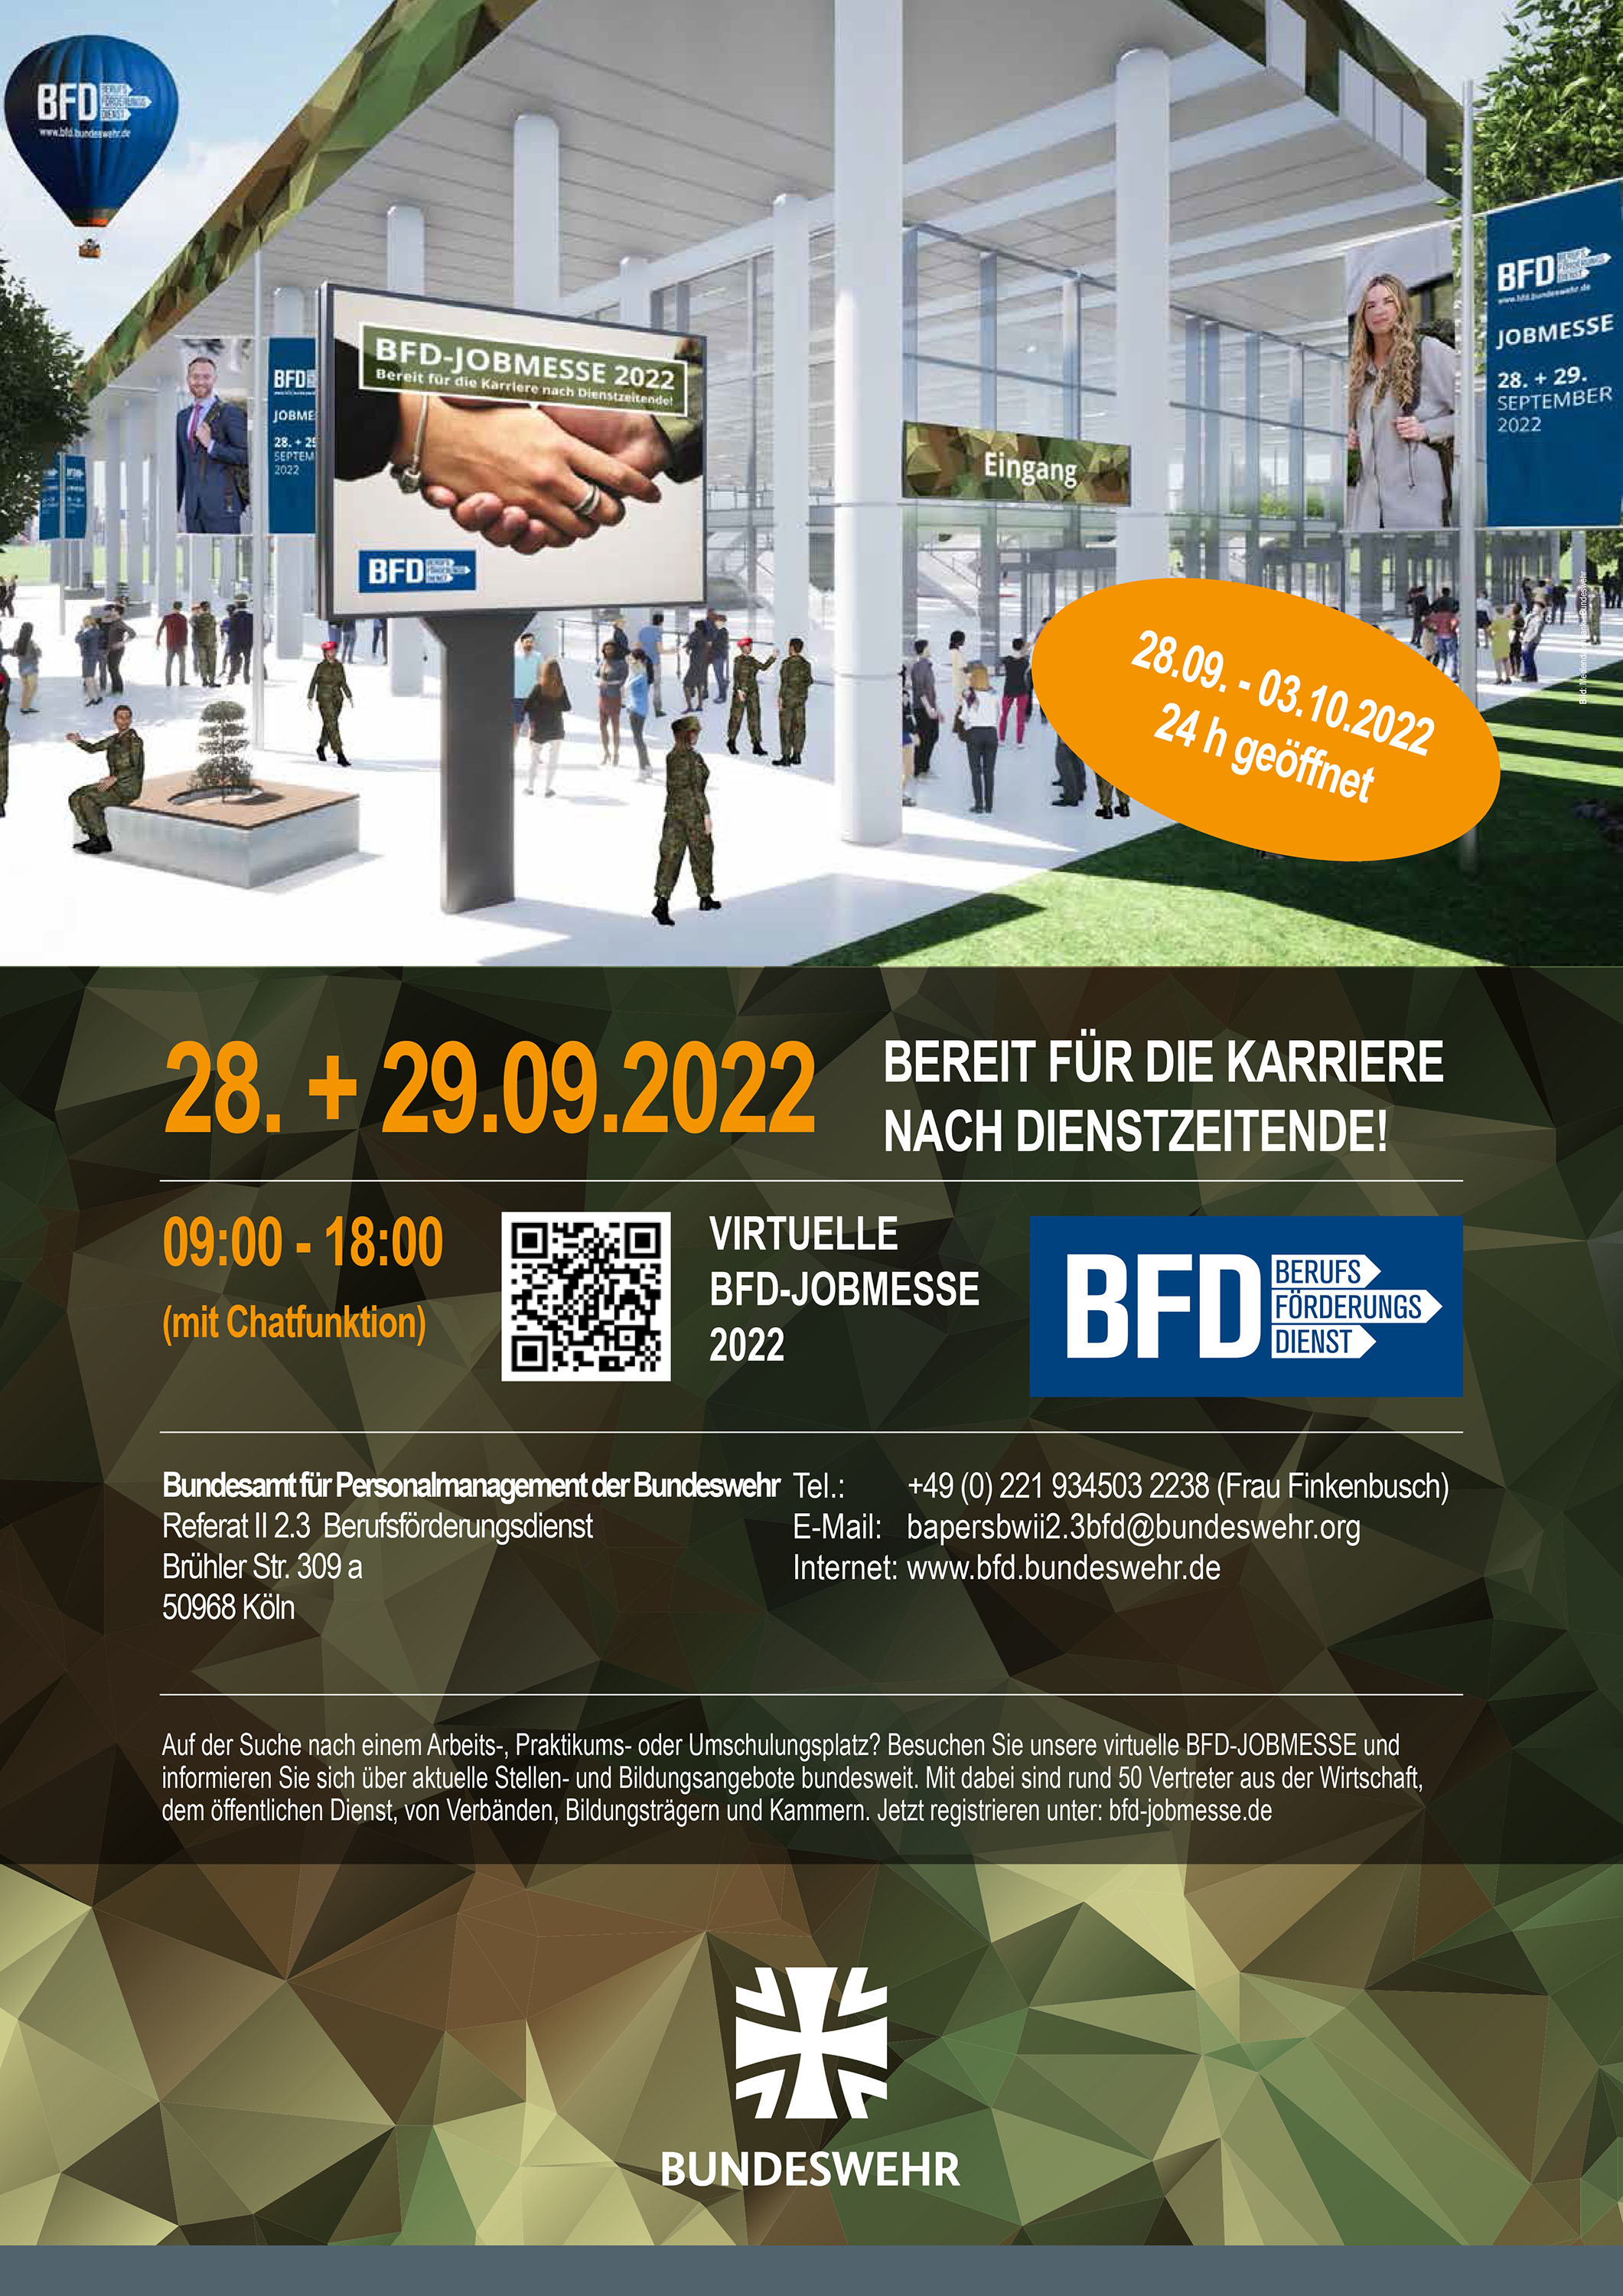 BFD-Jobmesse 2022